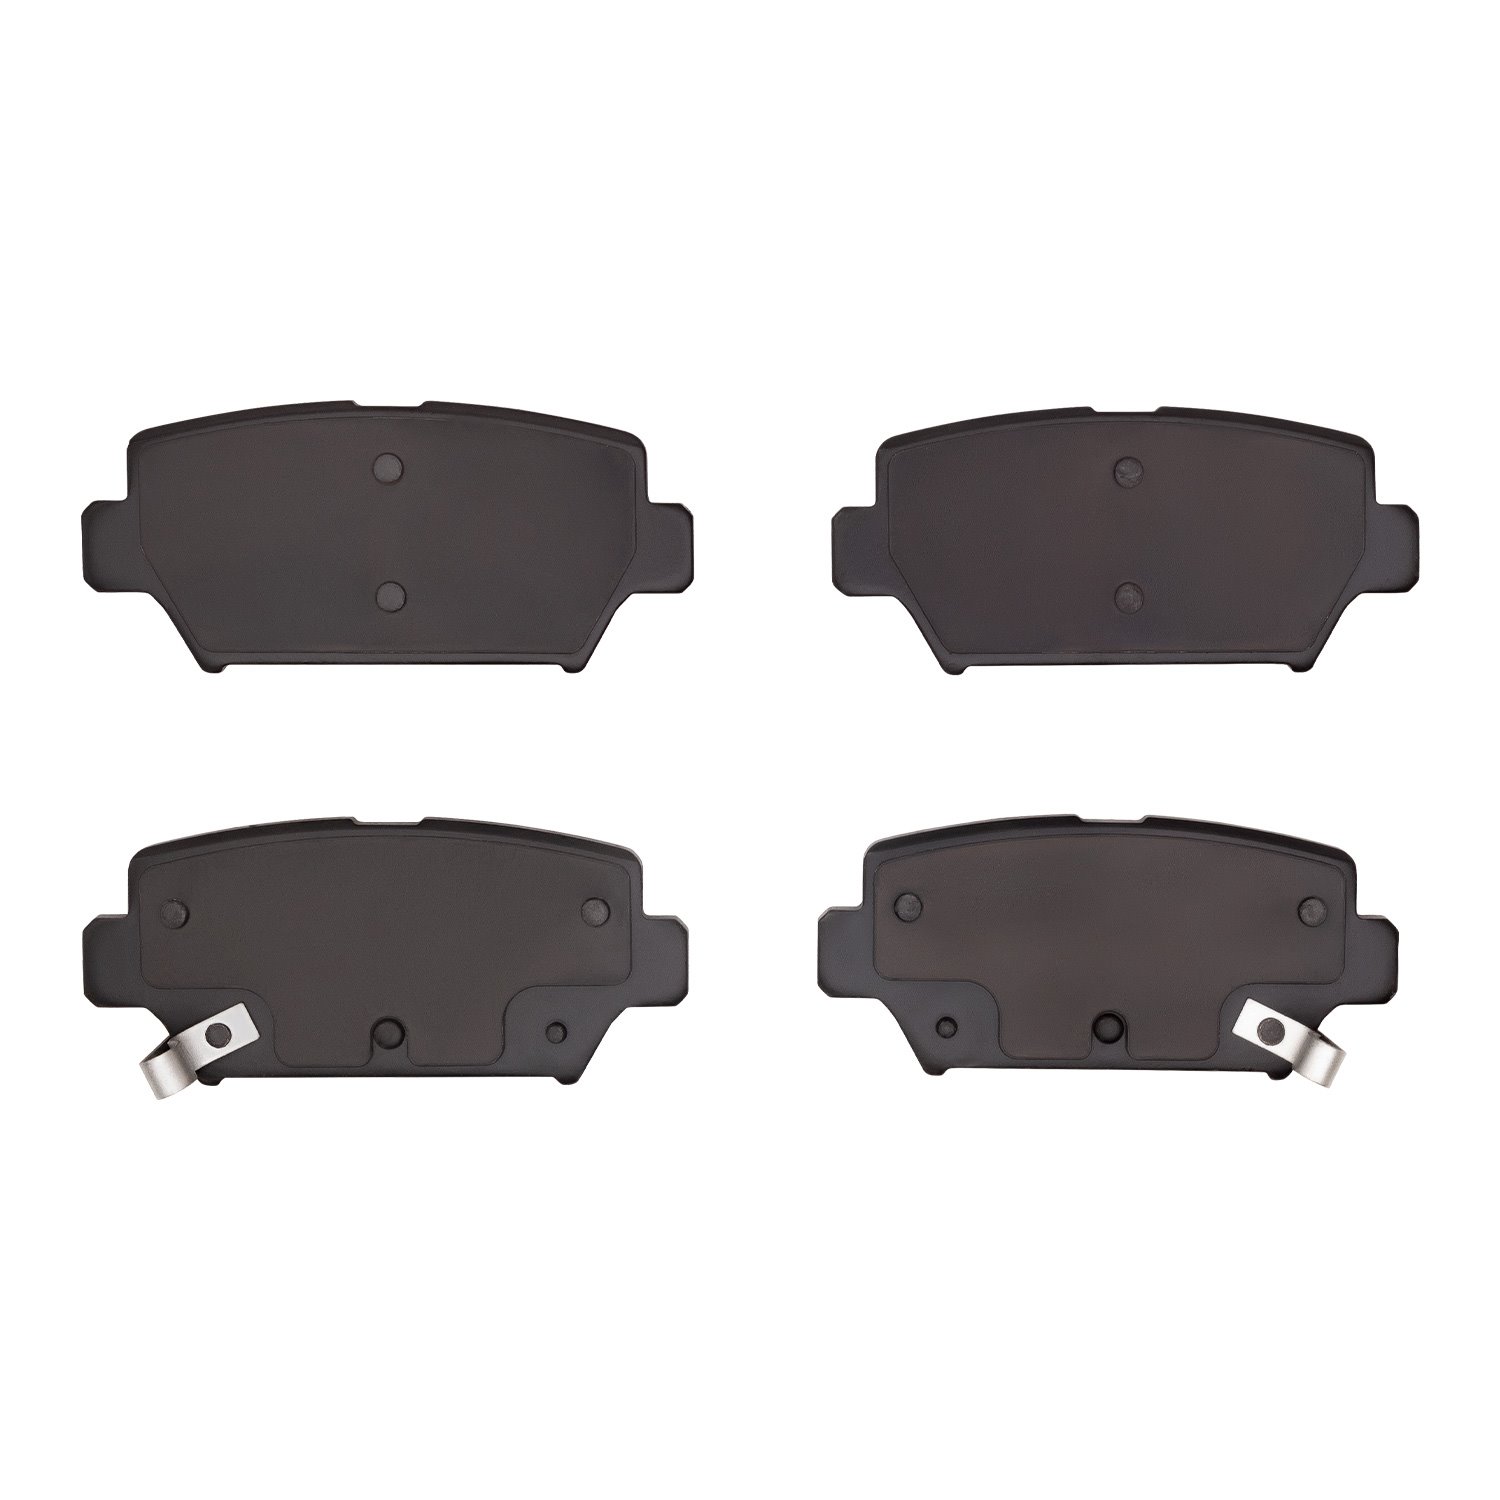 1310-2156-00 3000-Series Ceramic Brake Pads, Fits Select Mitsubishi, Position: Rear